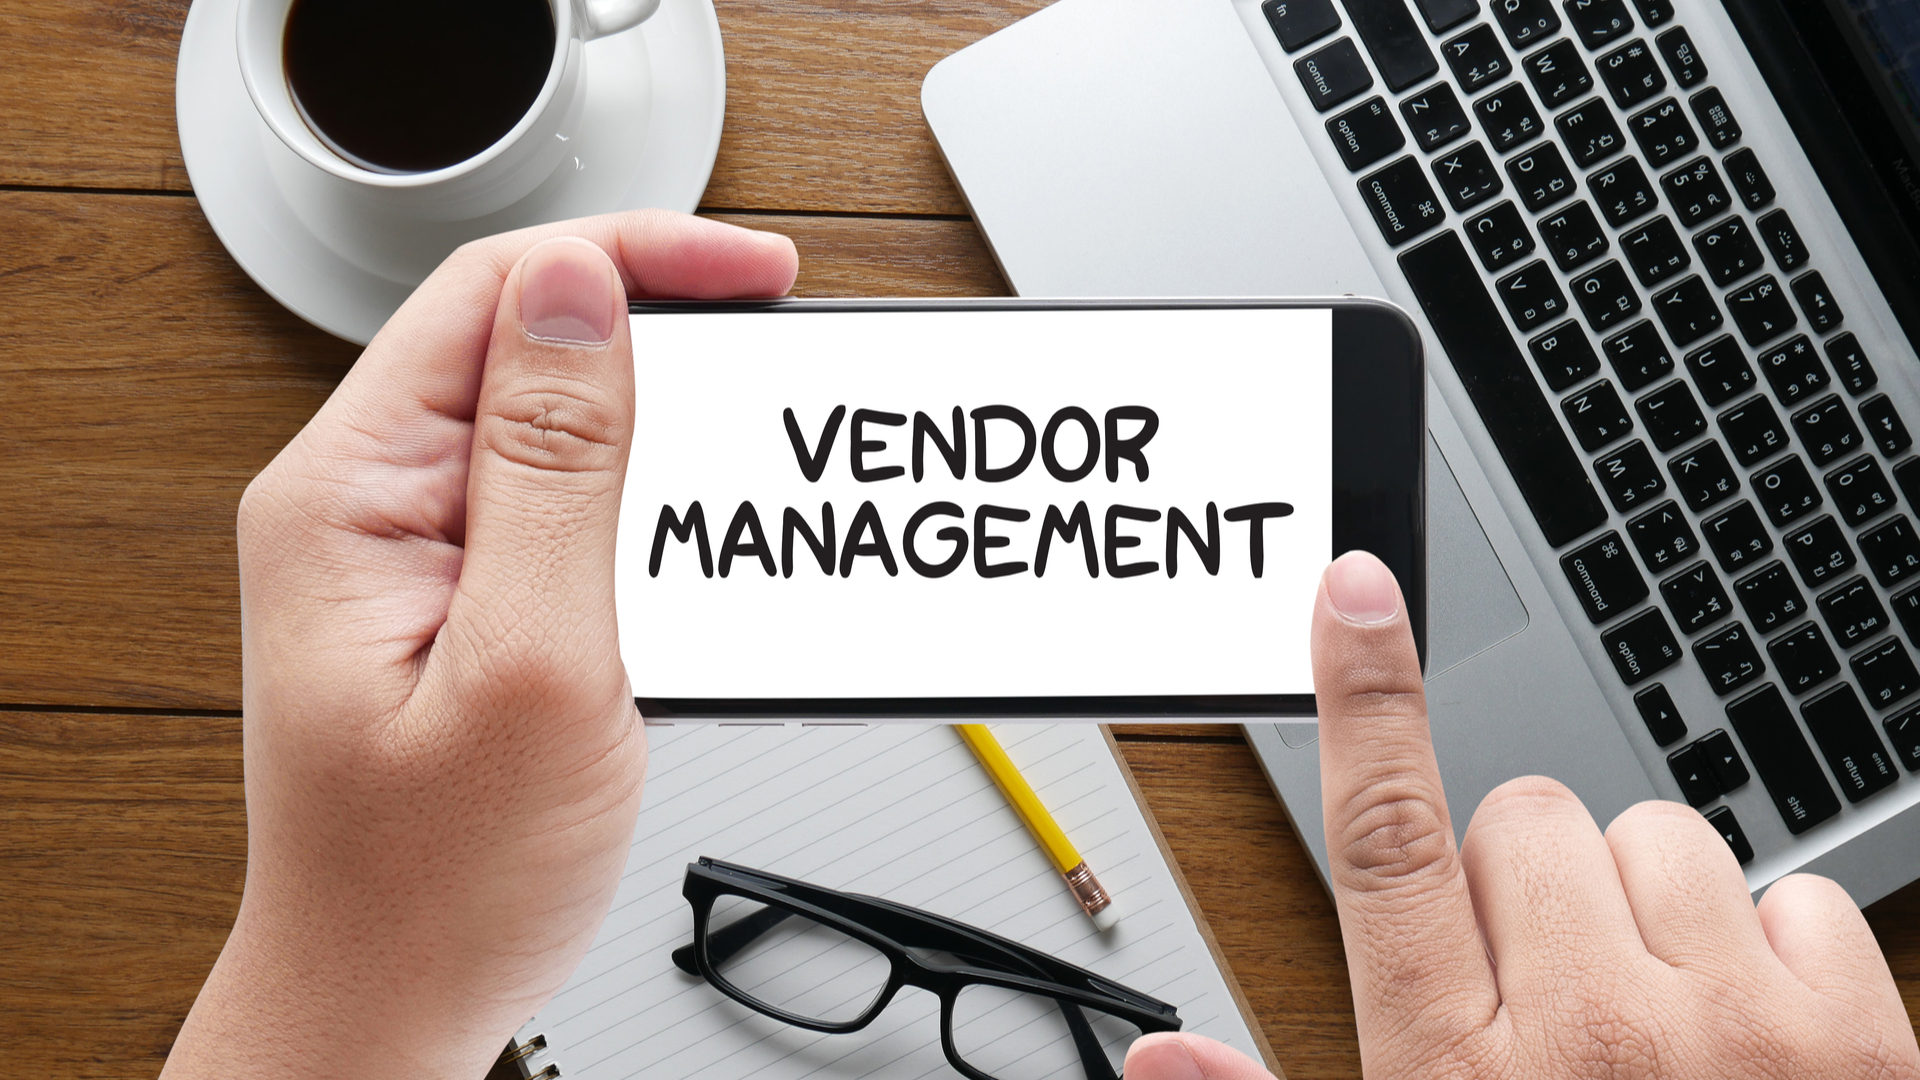 6-Point Checklist for Smart Vendor Management